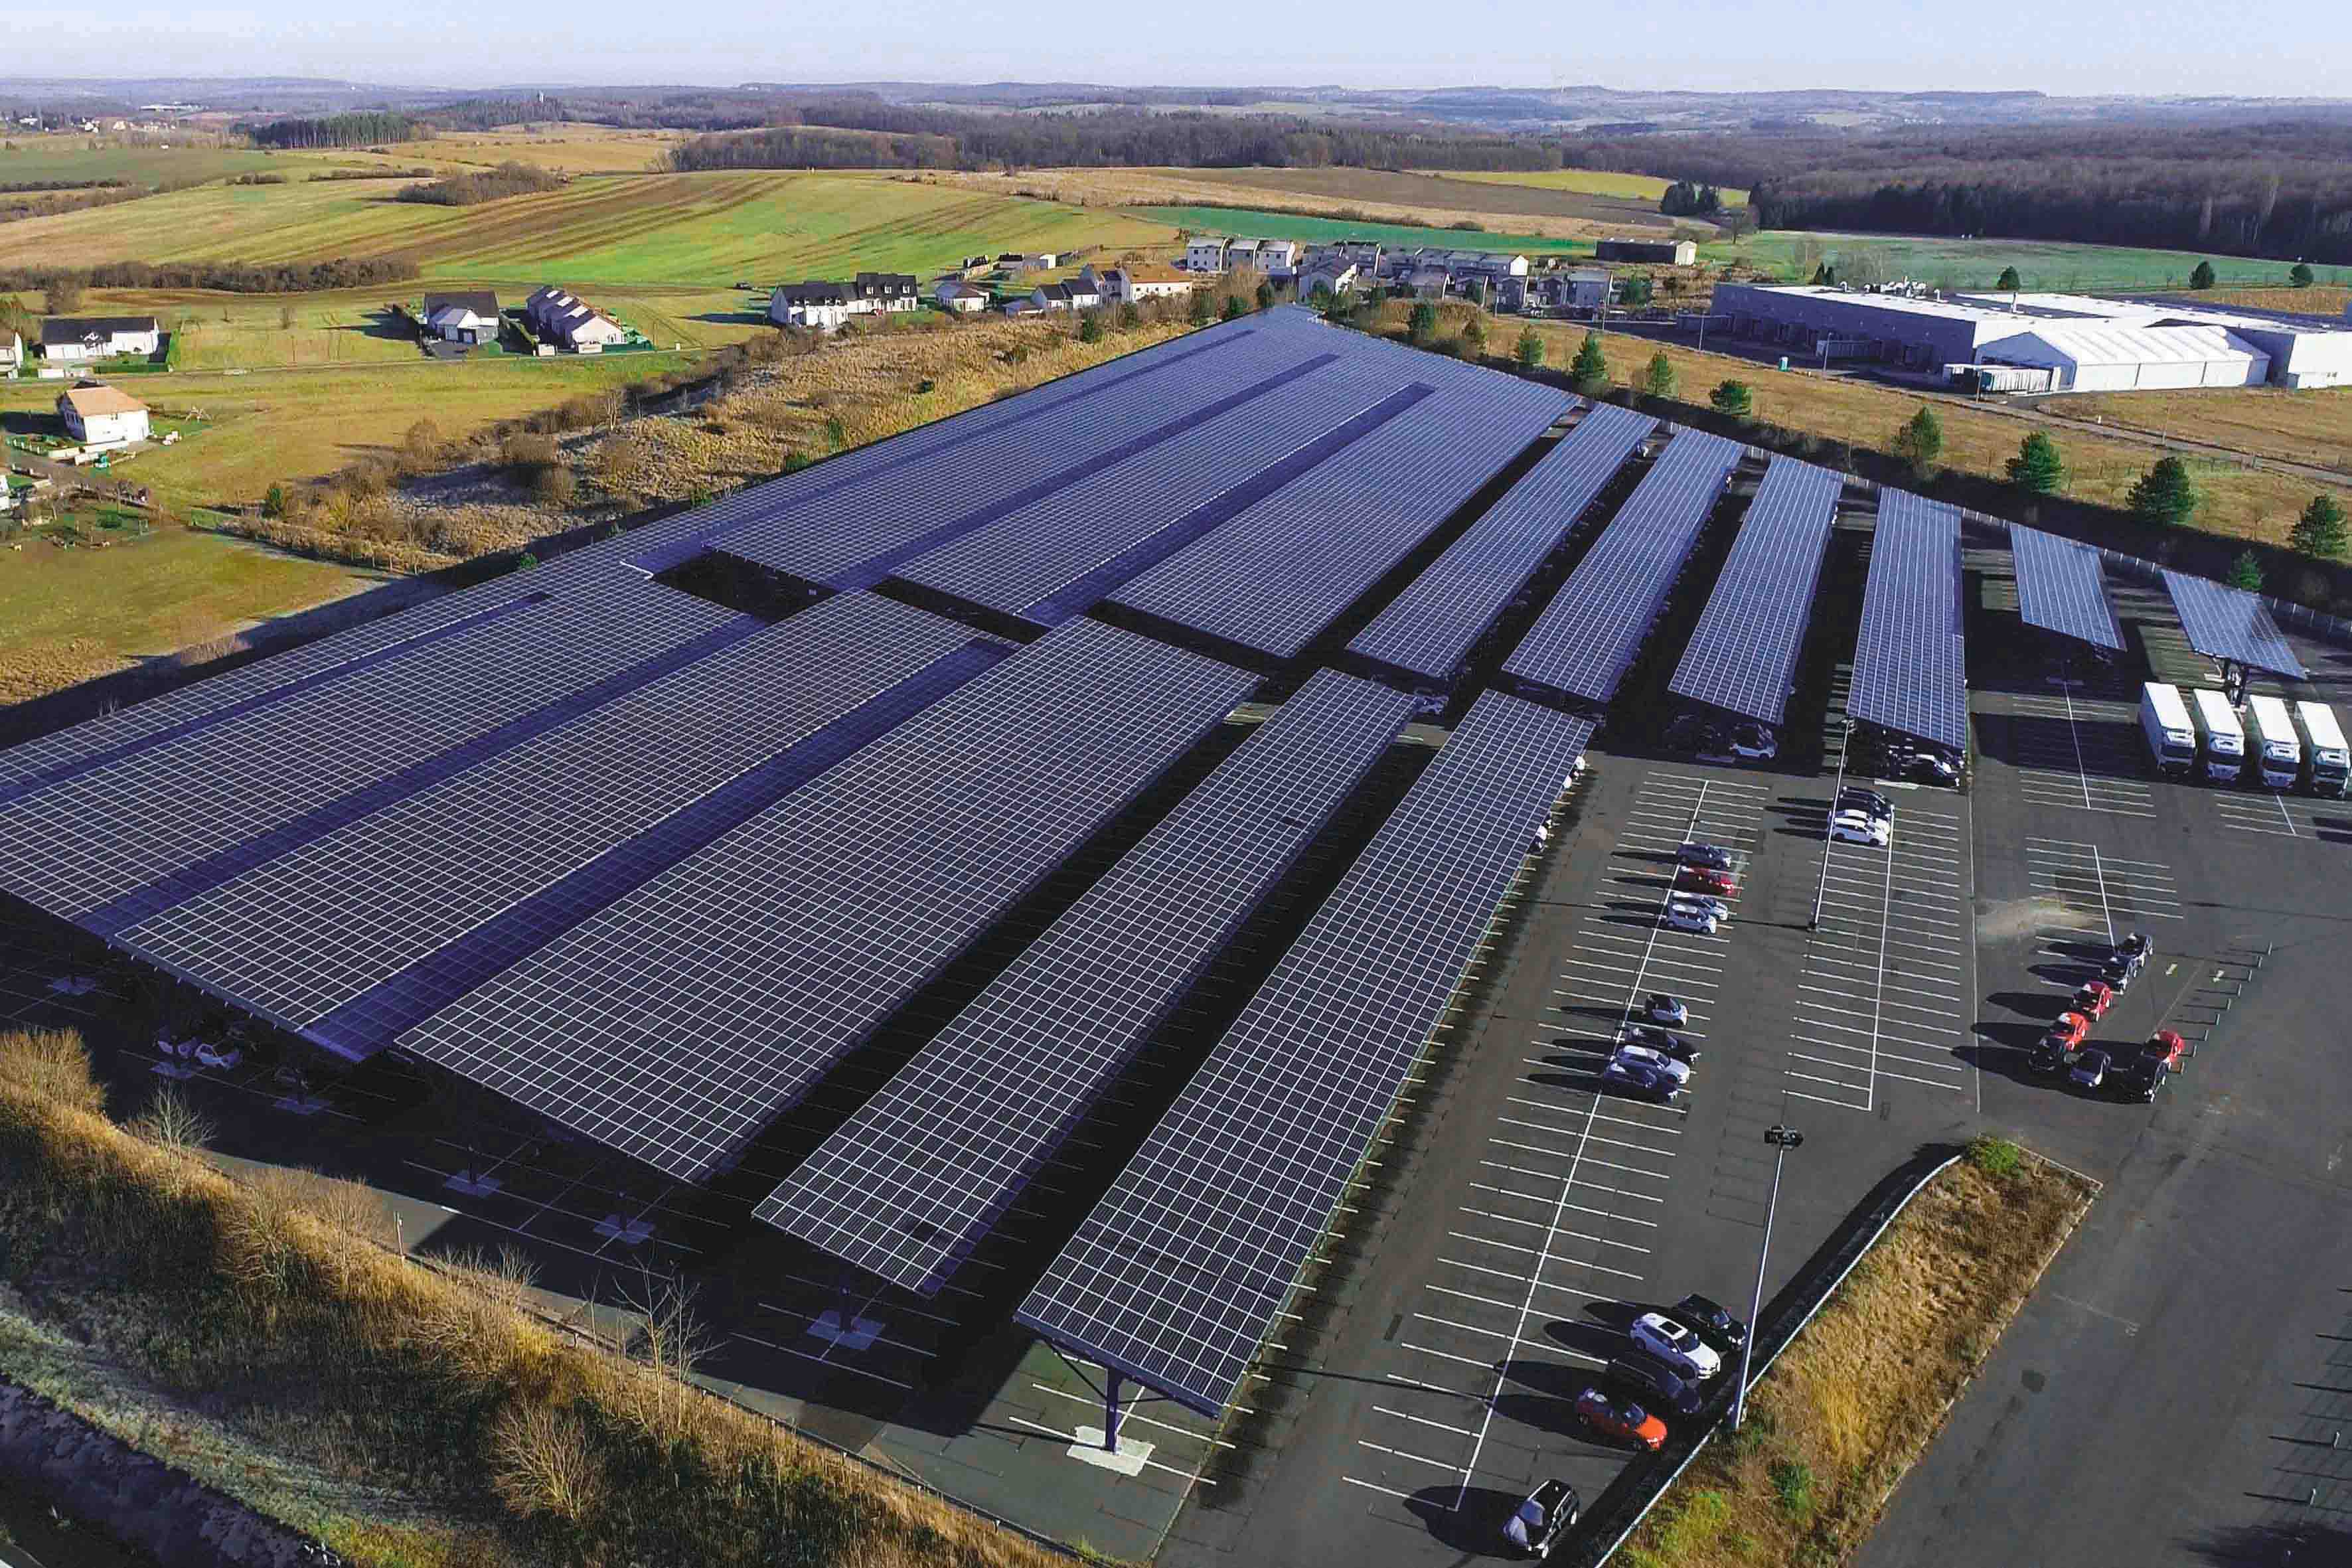 Axpo has already built dozens of solar canopies for car parks